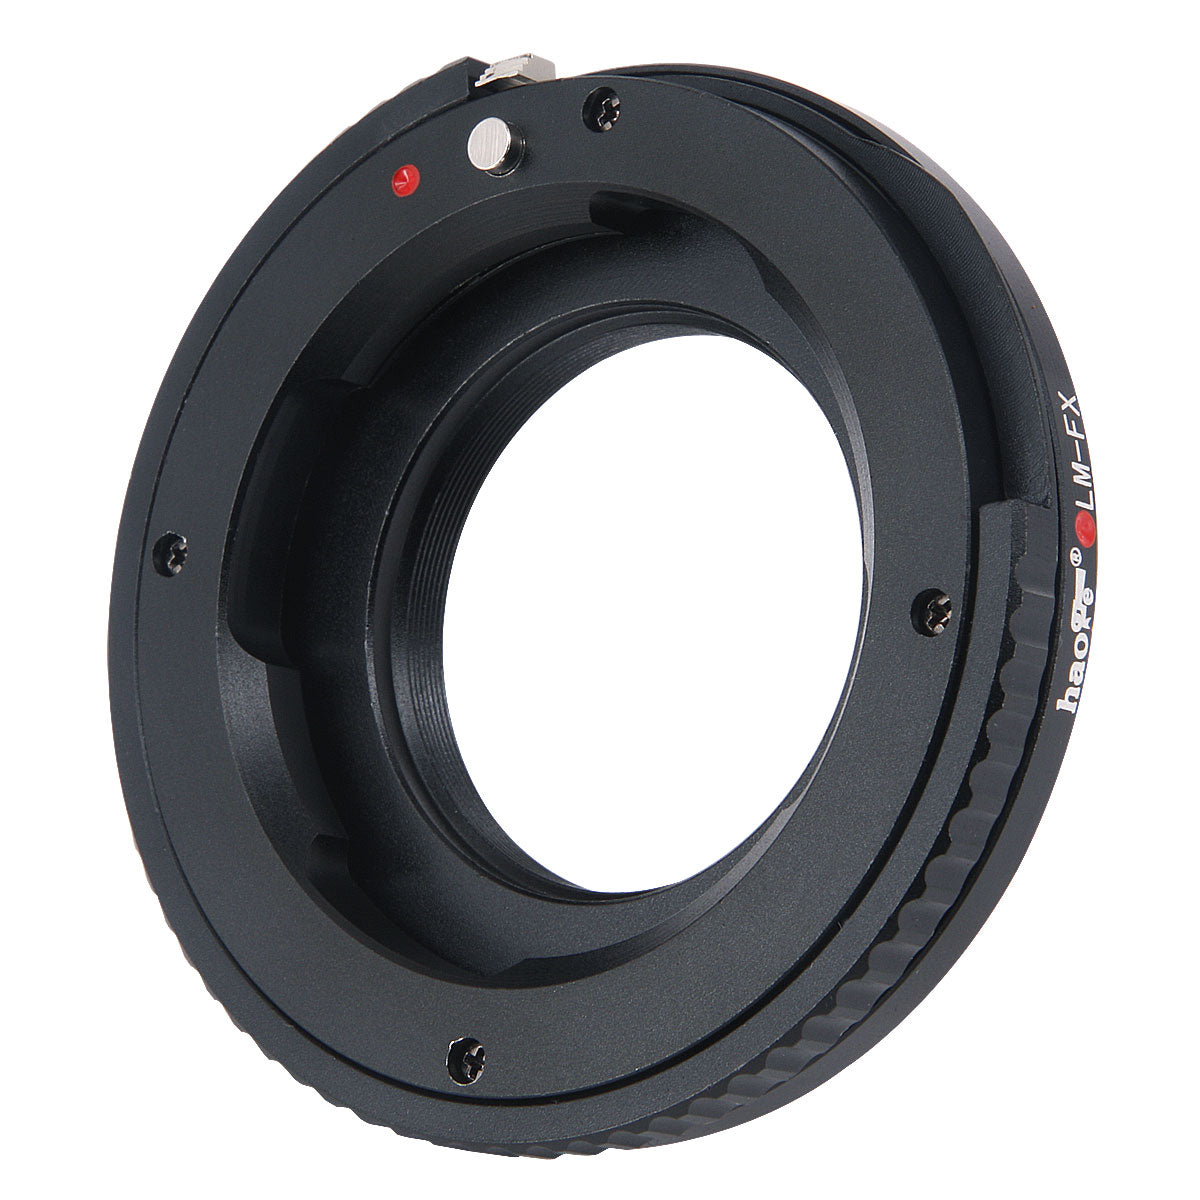 Haoge Macro Focus Lens Mount Adapter for Leica M LM Lens to Fujifilm Fuji X FX mount Camera such as X-A1 X-A2 X-A3 X-A5 X-A10 X-A20 X-E1 X-E2 X-E2s X-E3 X-H1 X-M1 X-Pro1 X-Pro2 X-T1 X-T2 X-T10 X-T20